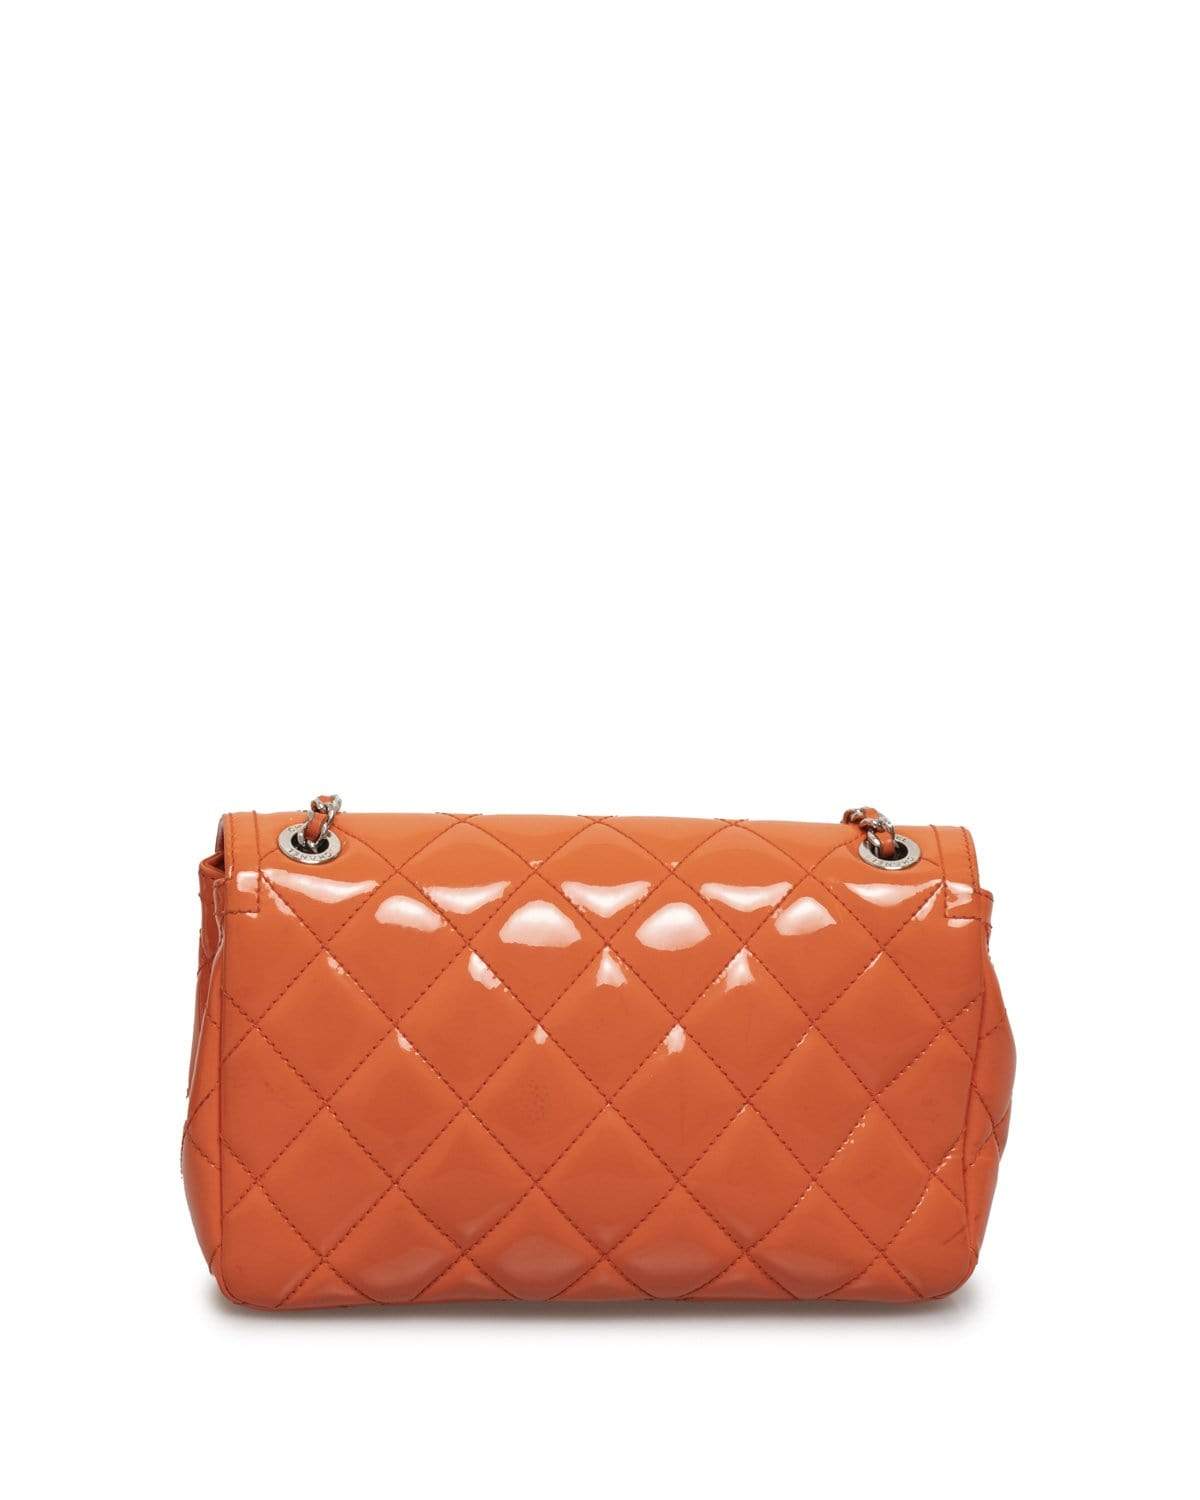 Chanel Chanel Orange Patent Leather 8.5' Classic Flap Bag PHW - AGC1043